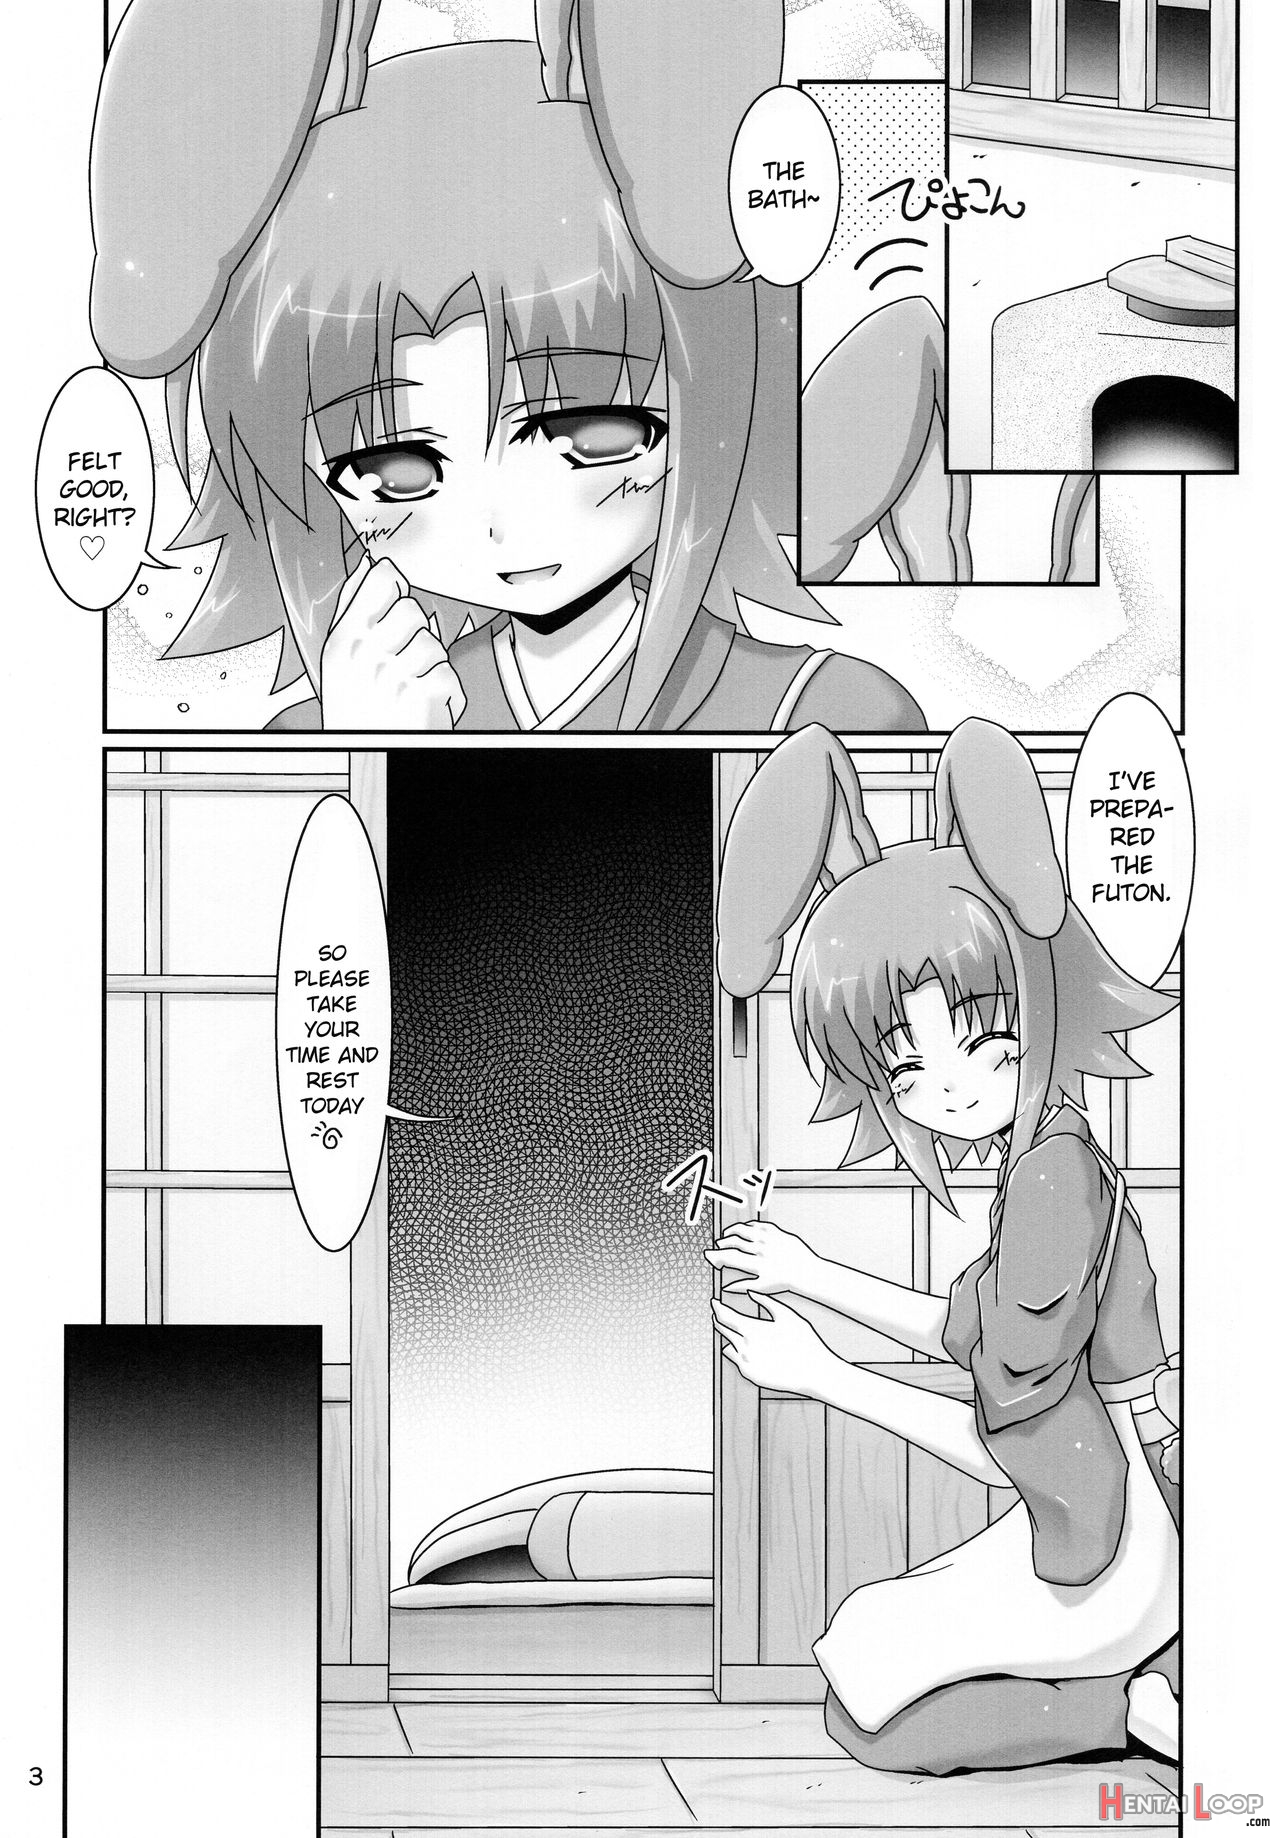 Kanata-san To Issho page 2